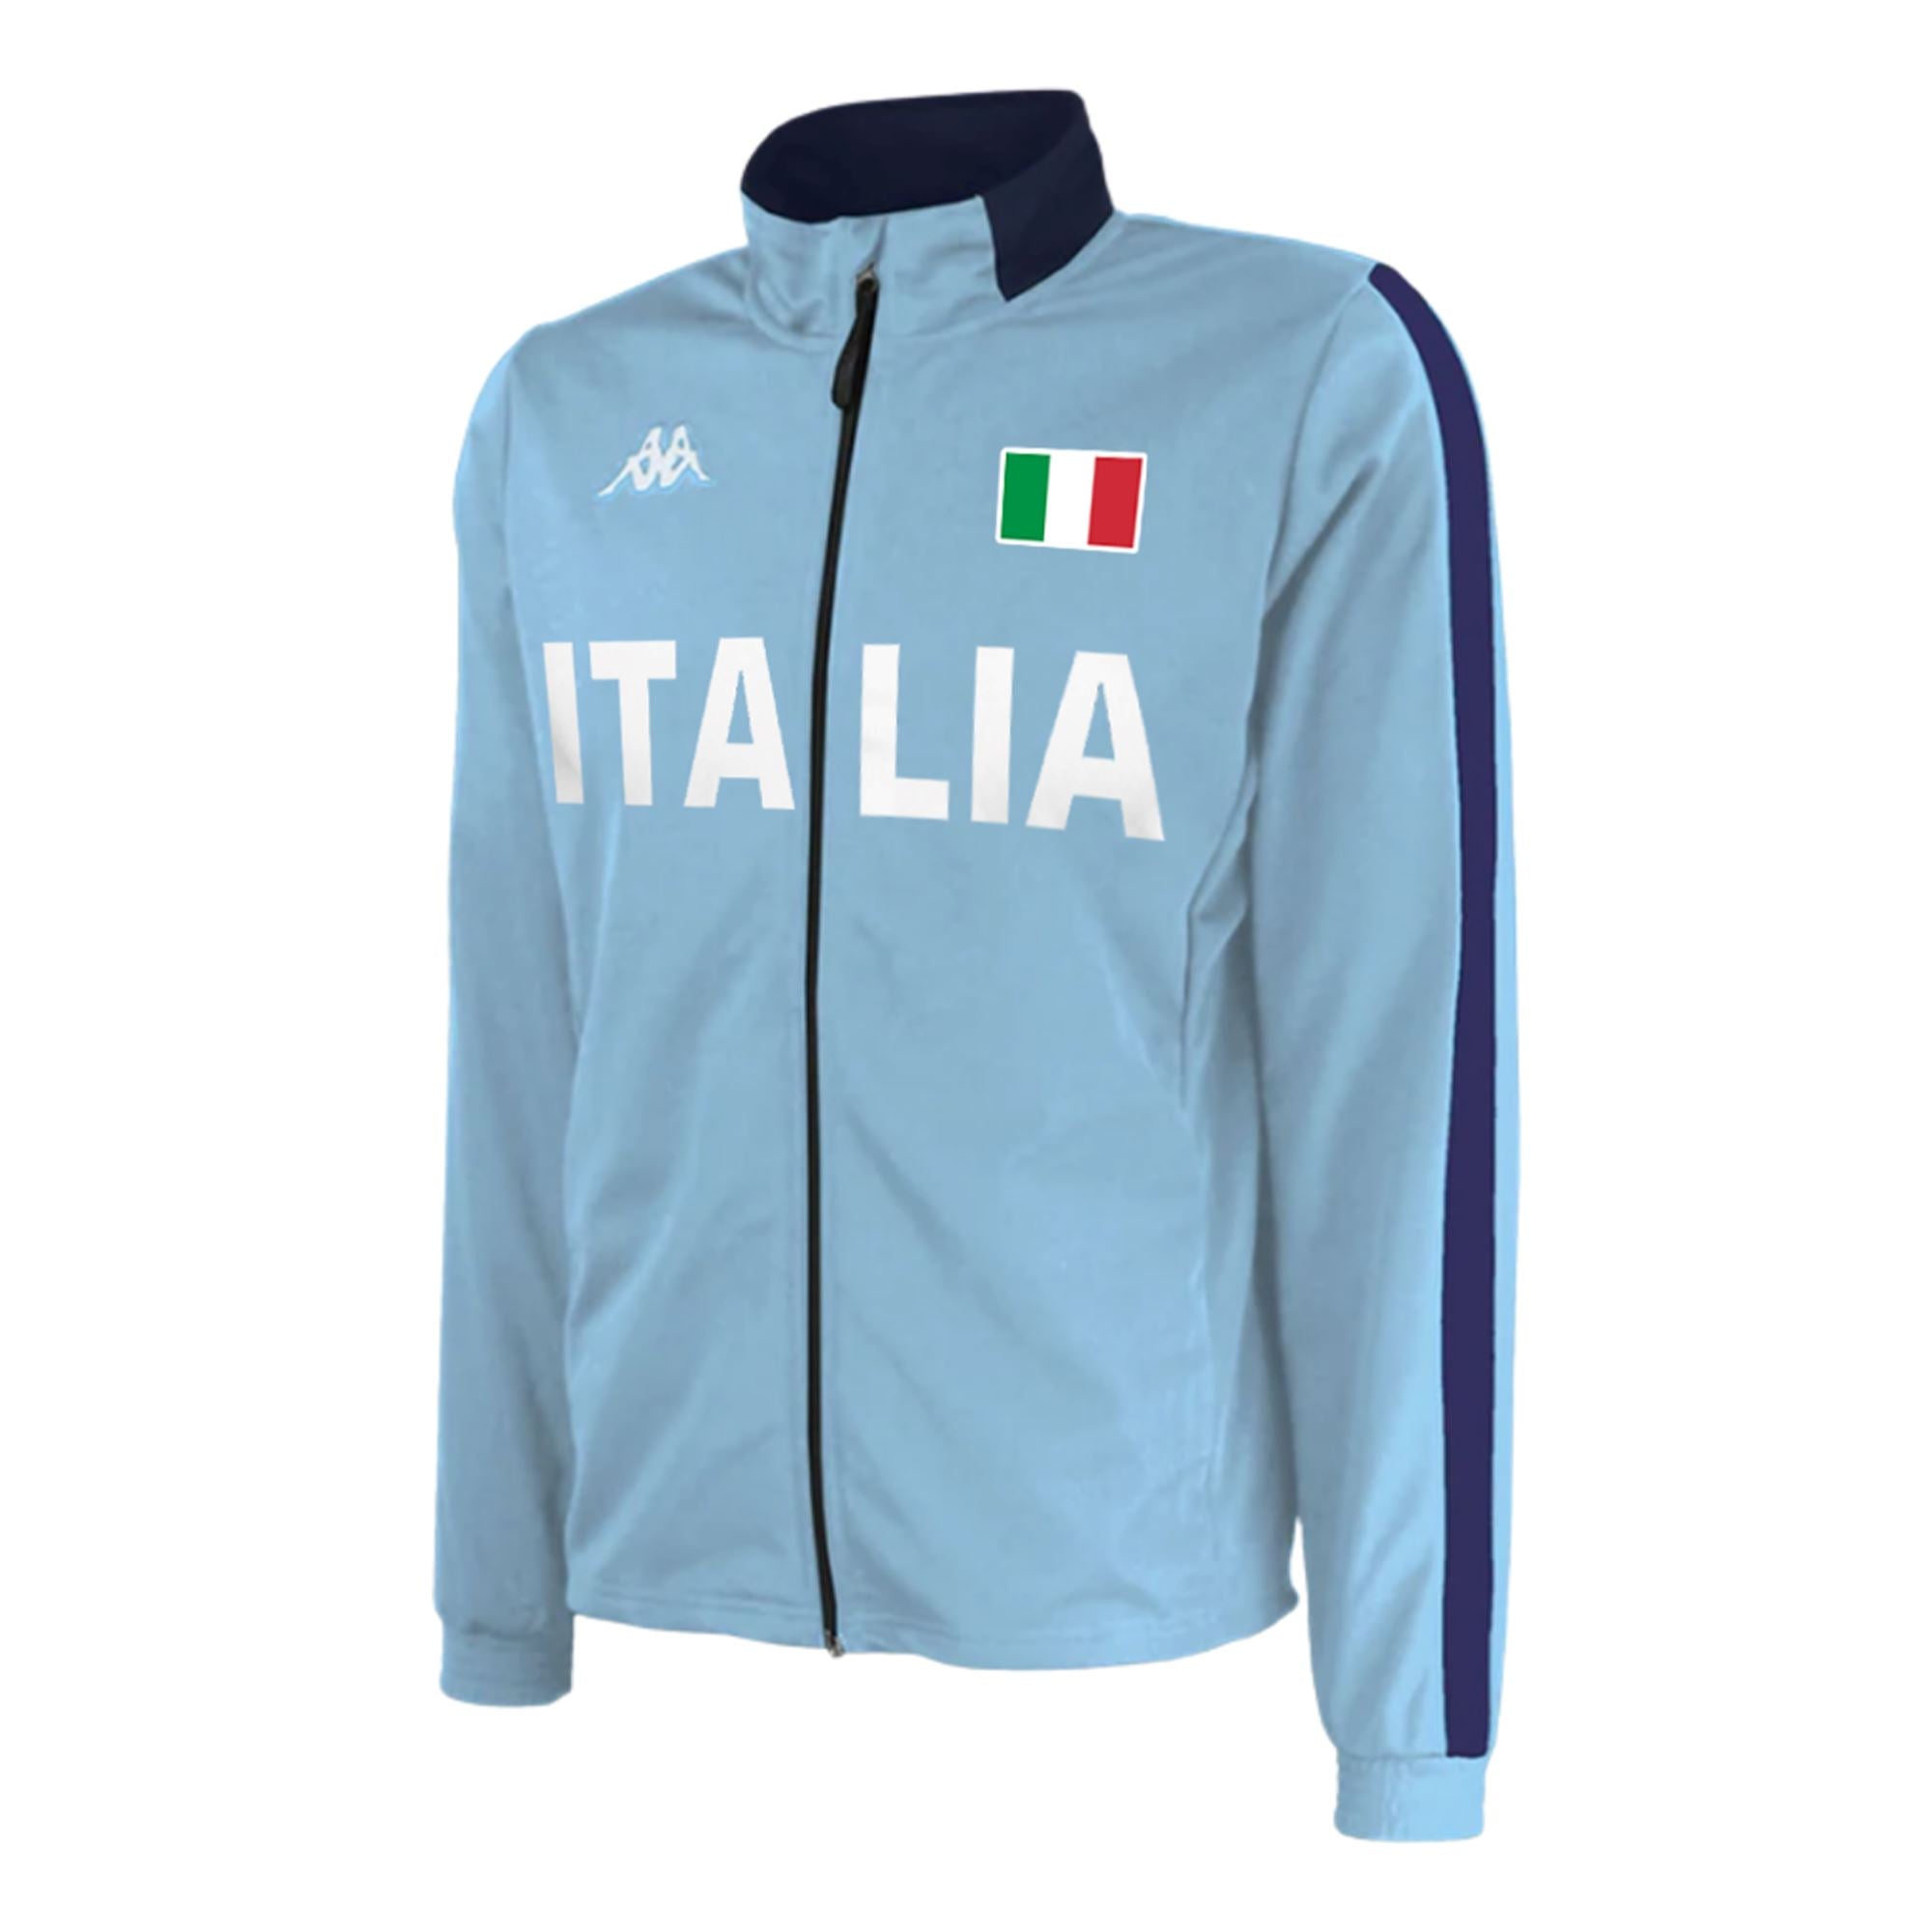 Kappa Sport Italia Salcito Full Zip Jacket Italia Jacket –